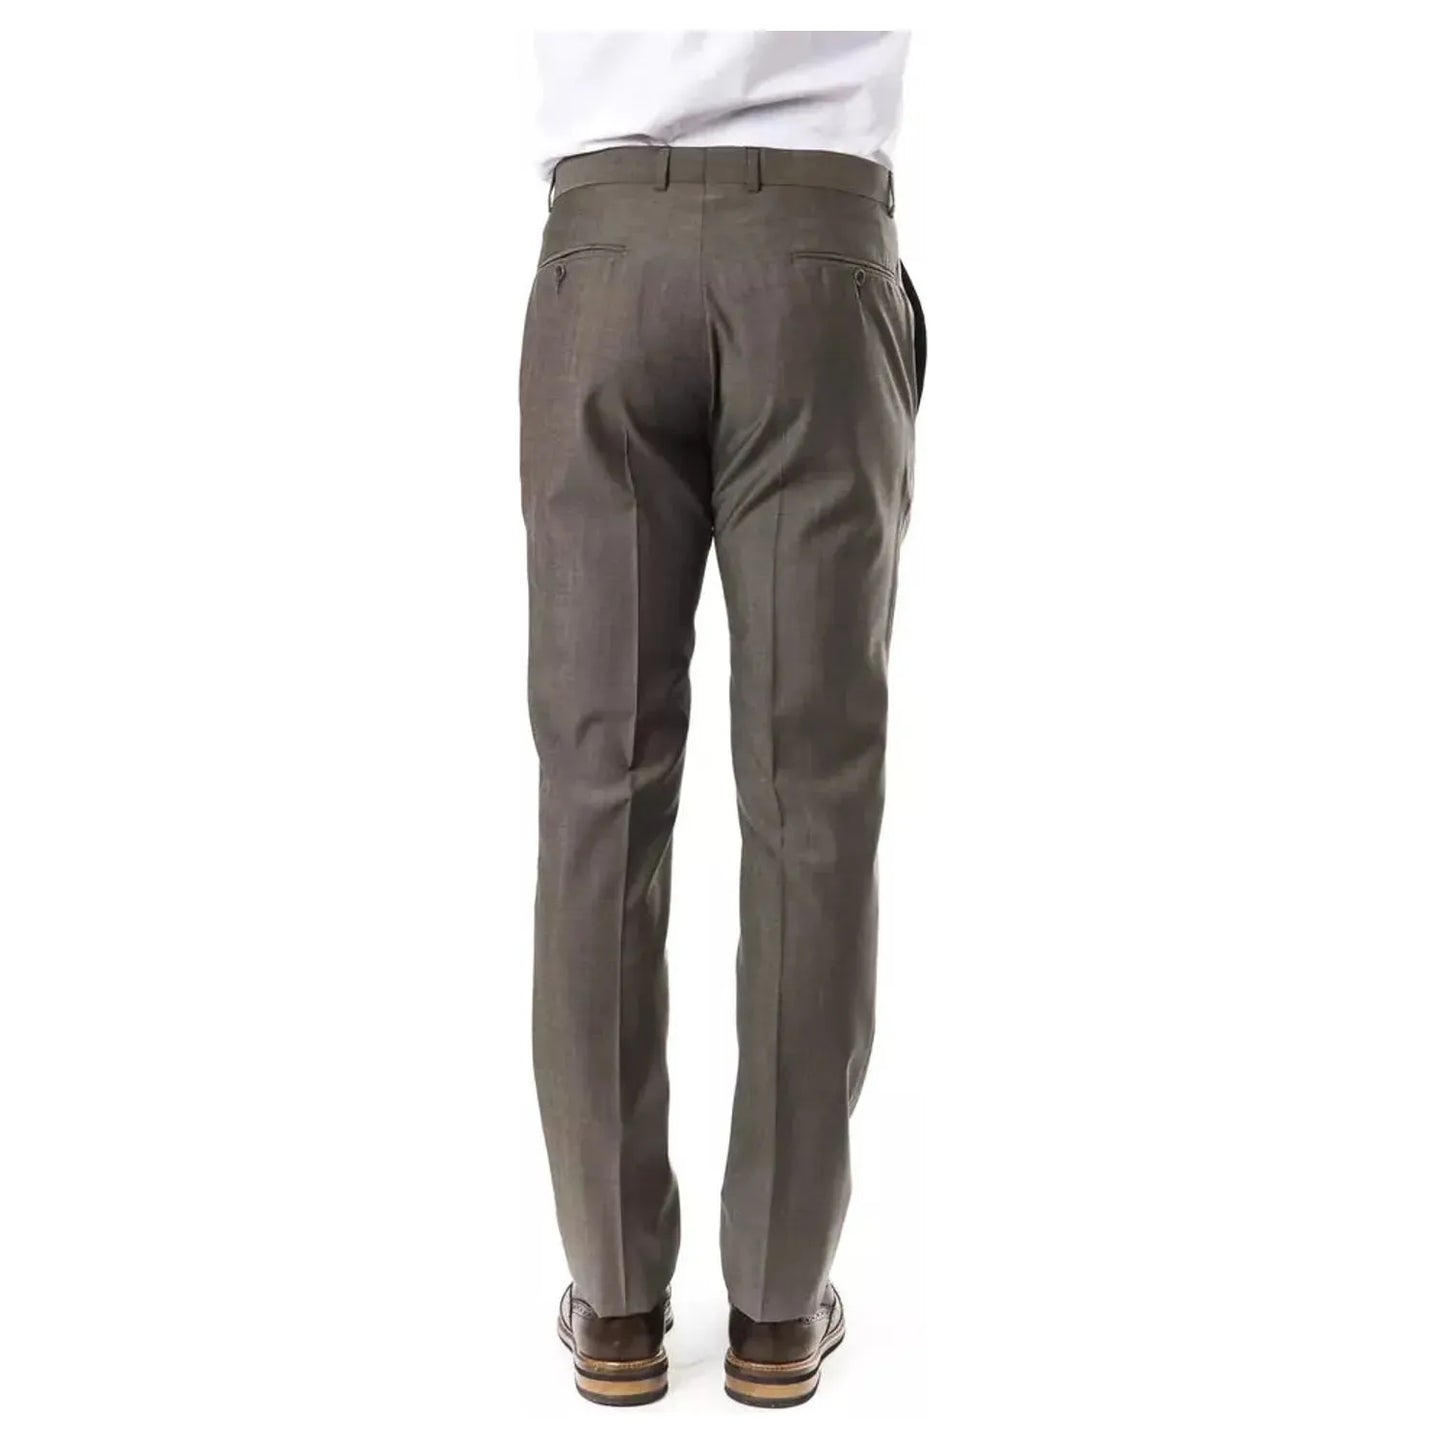 Uominitaliani Elegant Gray Woolen Suit Pants - Drop 7 Cut u-jeans-pant-5 stock_product_image_17033_230097574-15-eb479f6f-80f.webp